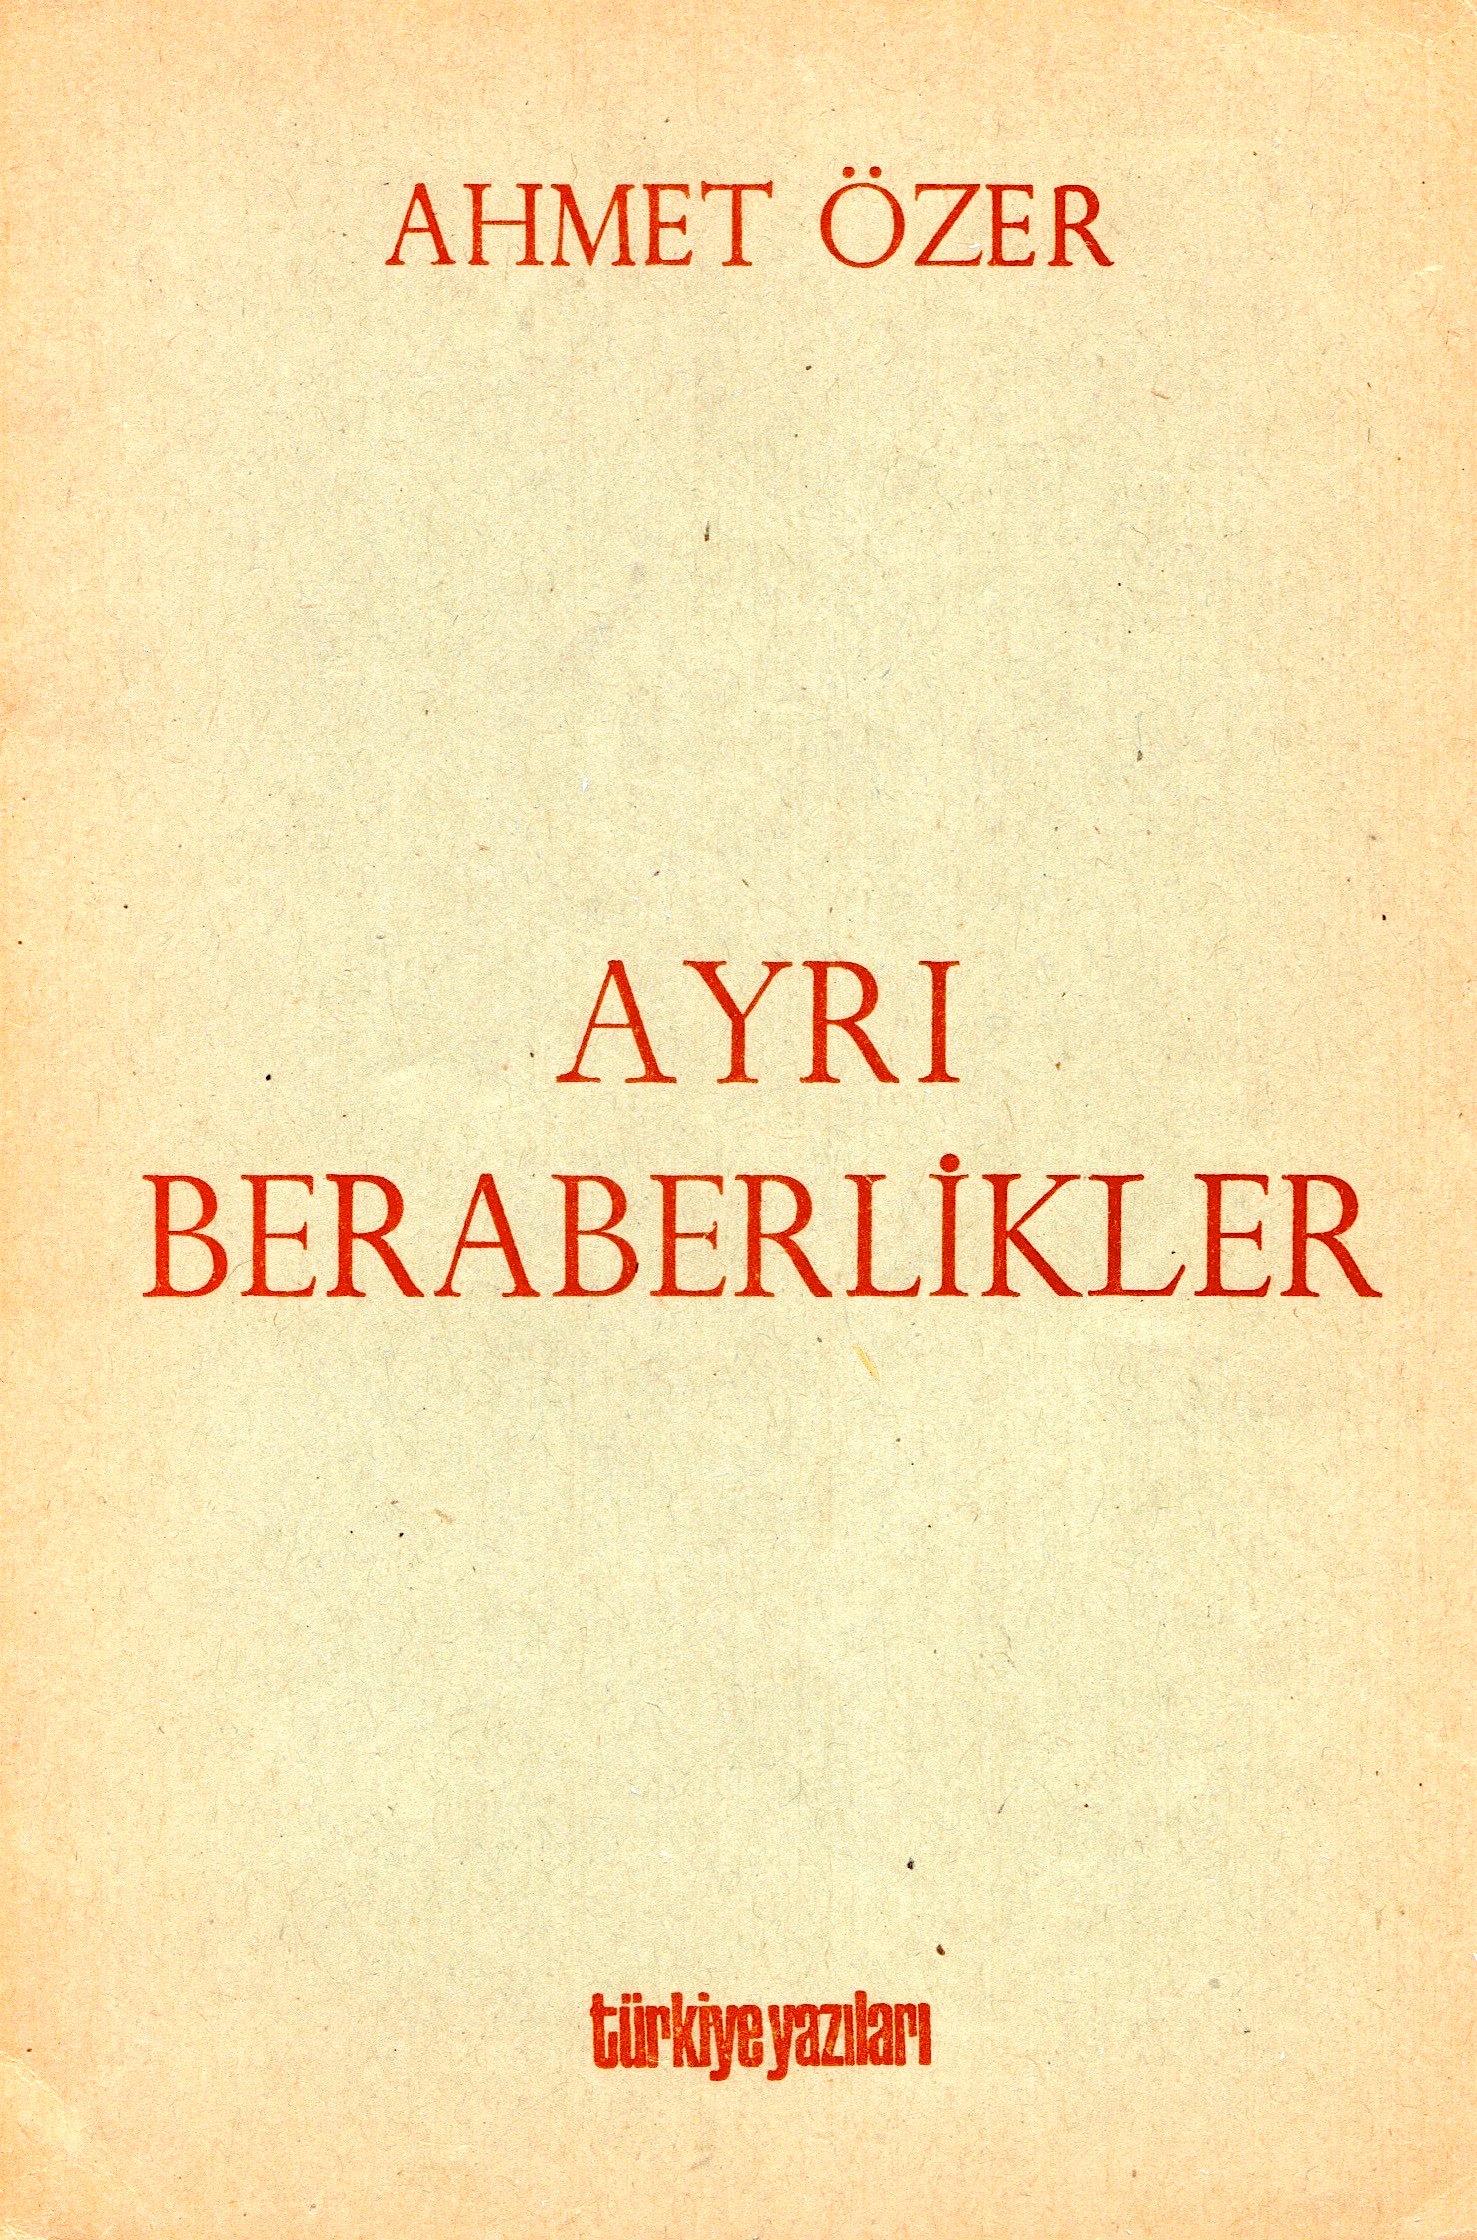 7. Ayri Beraberlikler Ankara 1981 77 s.